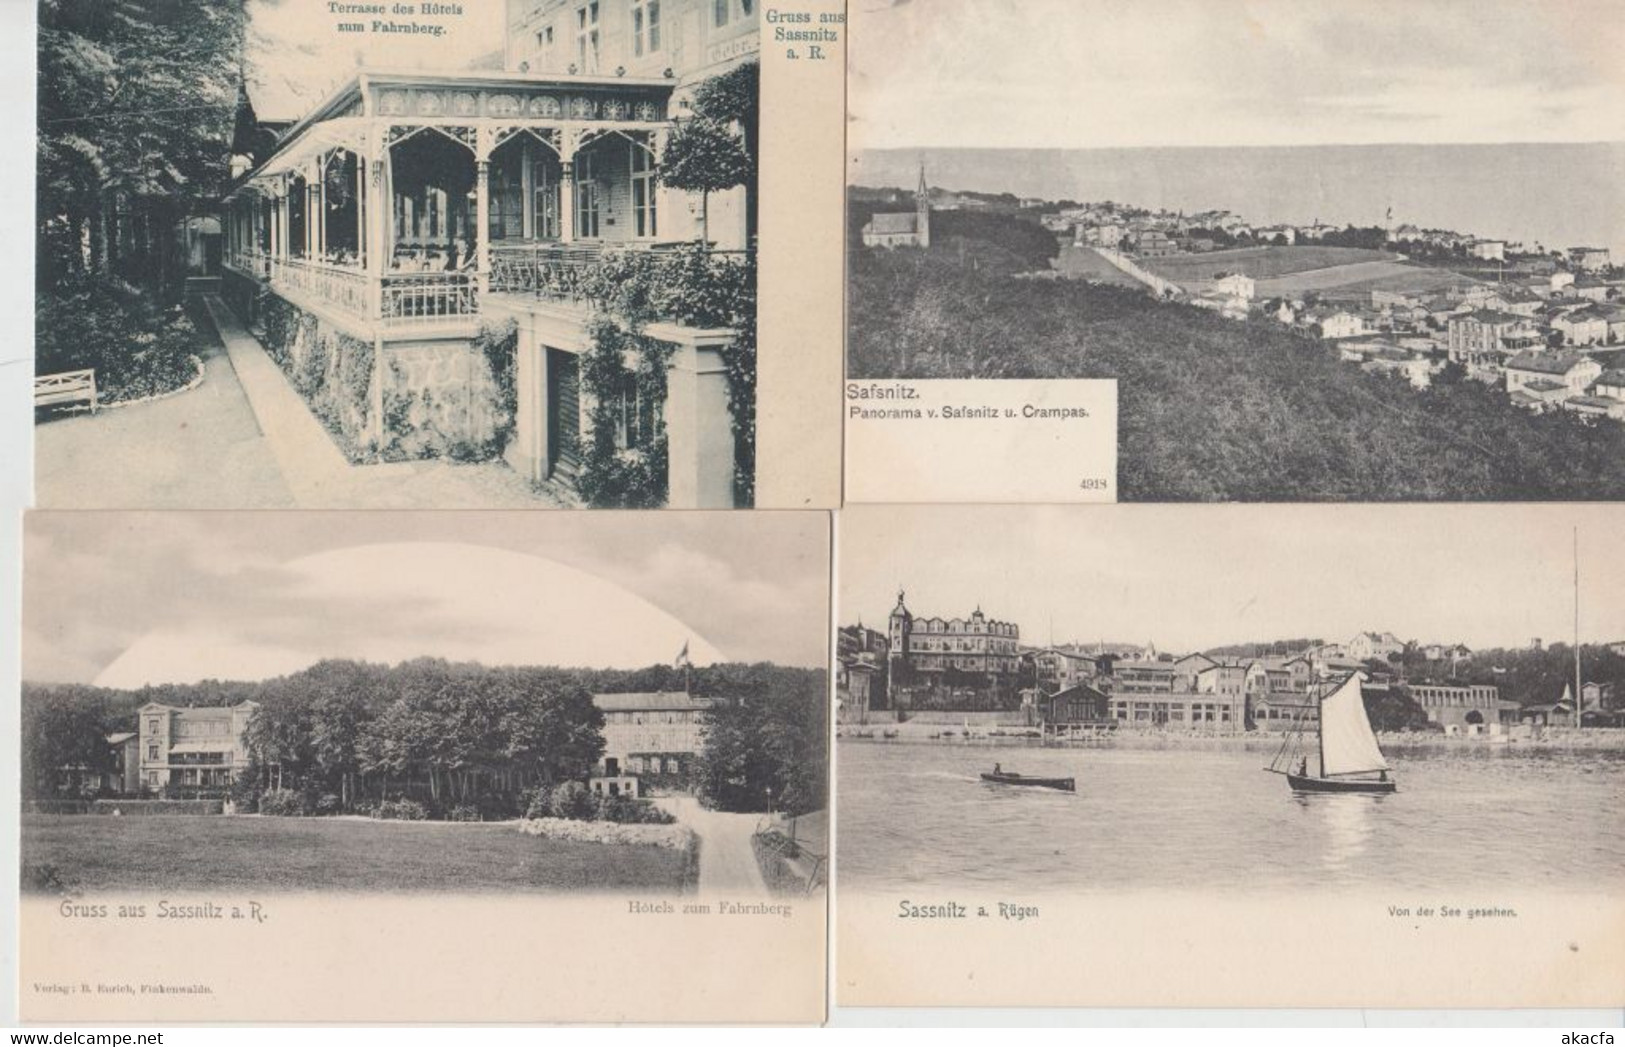 RÜGEN Island GERMANY 22 Vintage Bettter Postcards Pre-1920 (L5164) - Collections & Lots